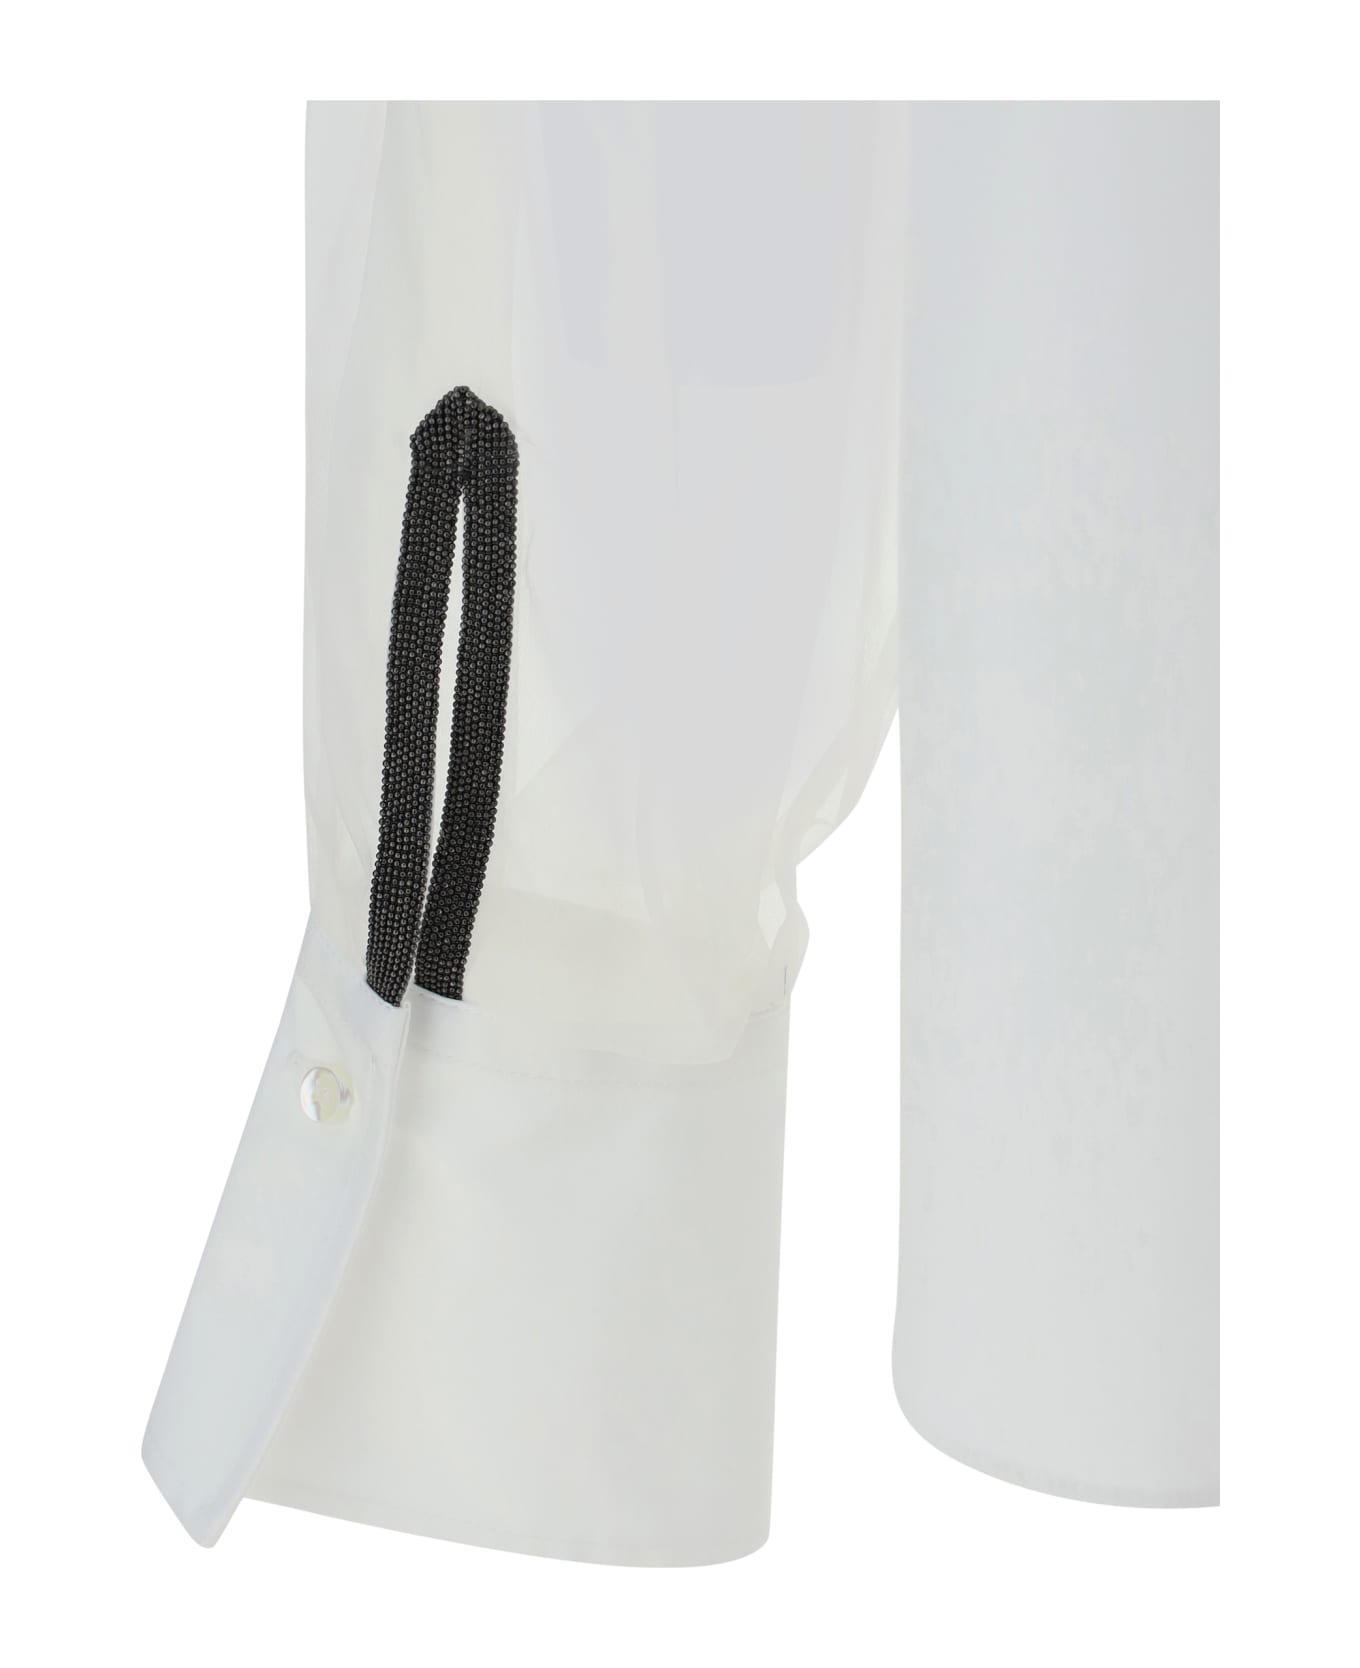 Brunello Cucinelli Long-sleeved Shirt - C159